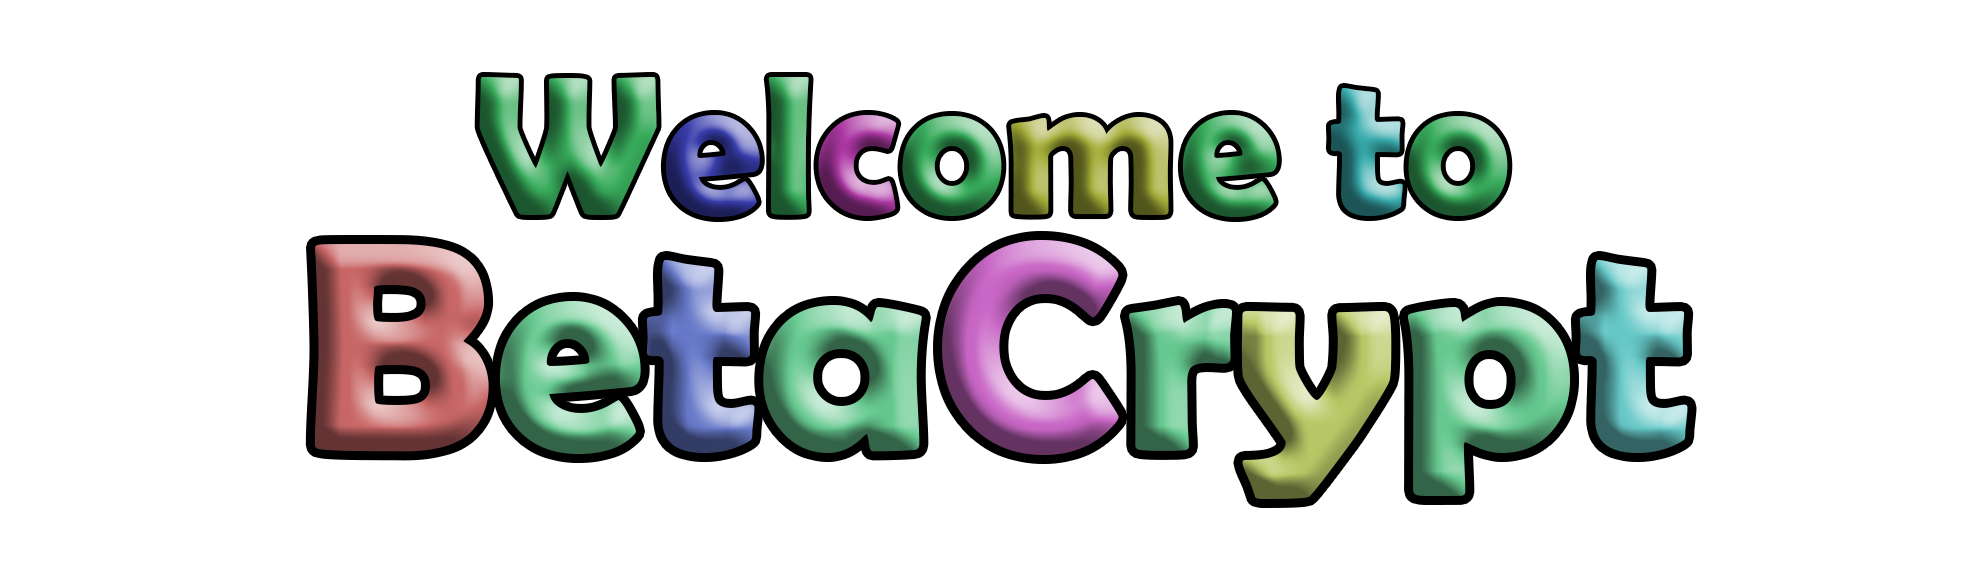 BetaCrypt Logo